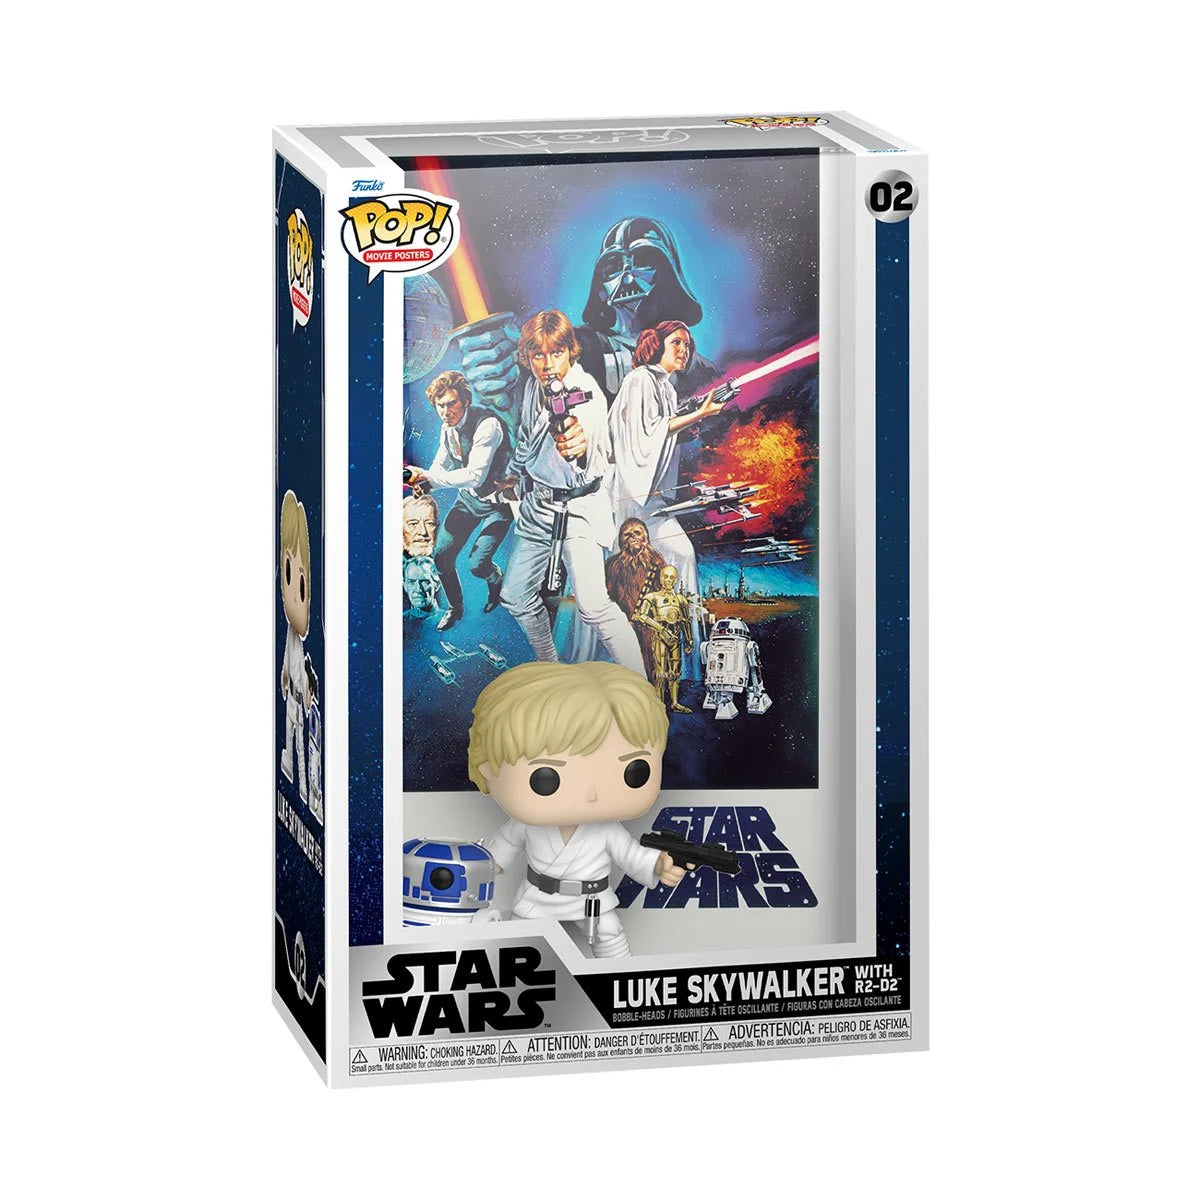 Luke Skywalker A New Hope Episode IV - Star Wars Pop! Movie Poster Figure with Case